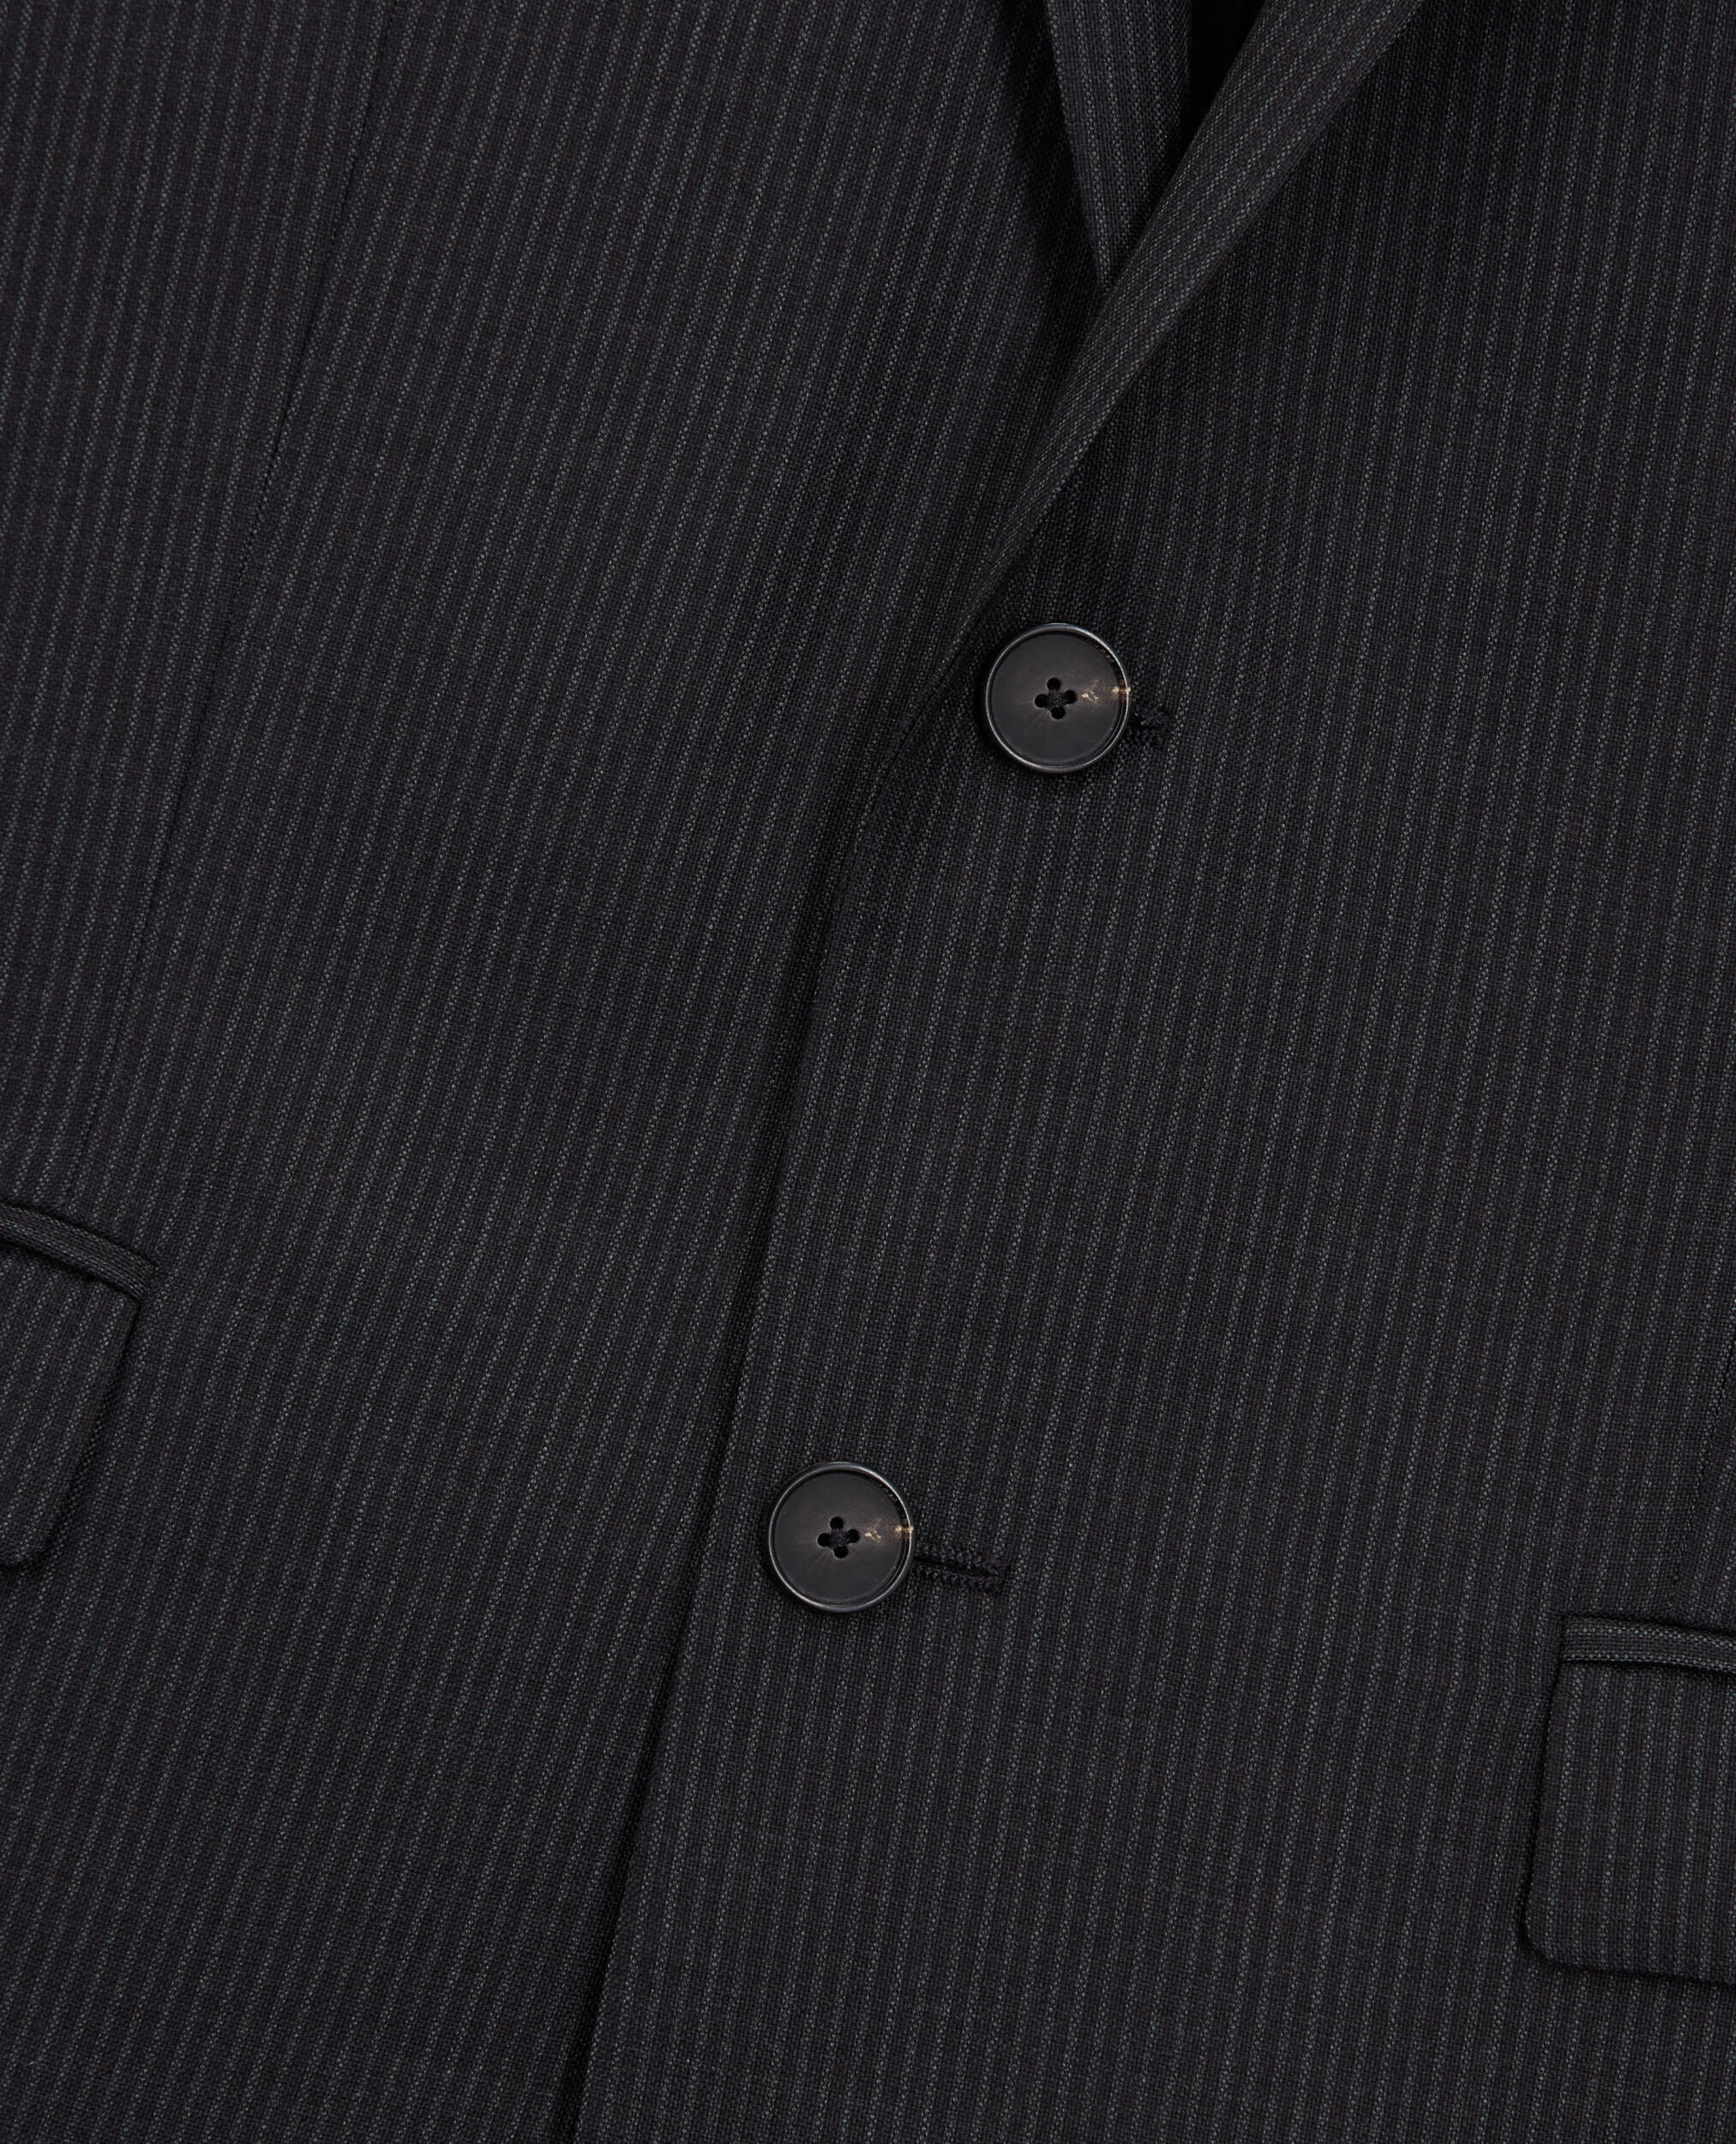 Striped wool suit jacket, BLACK GREY, hi-res image number null